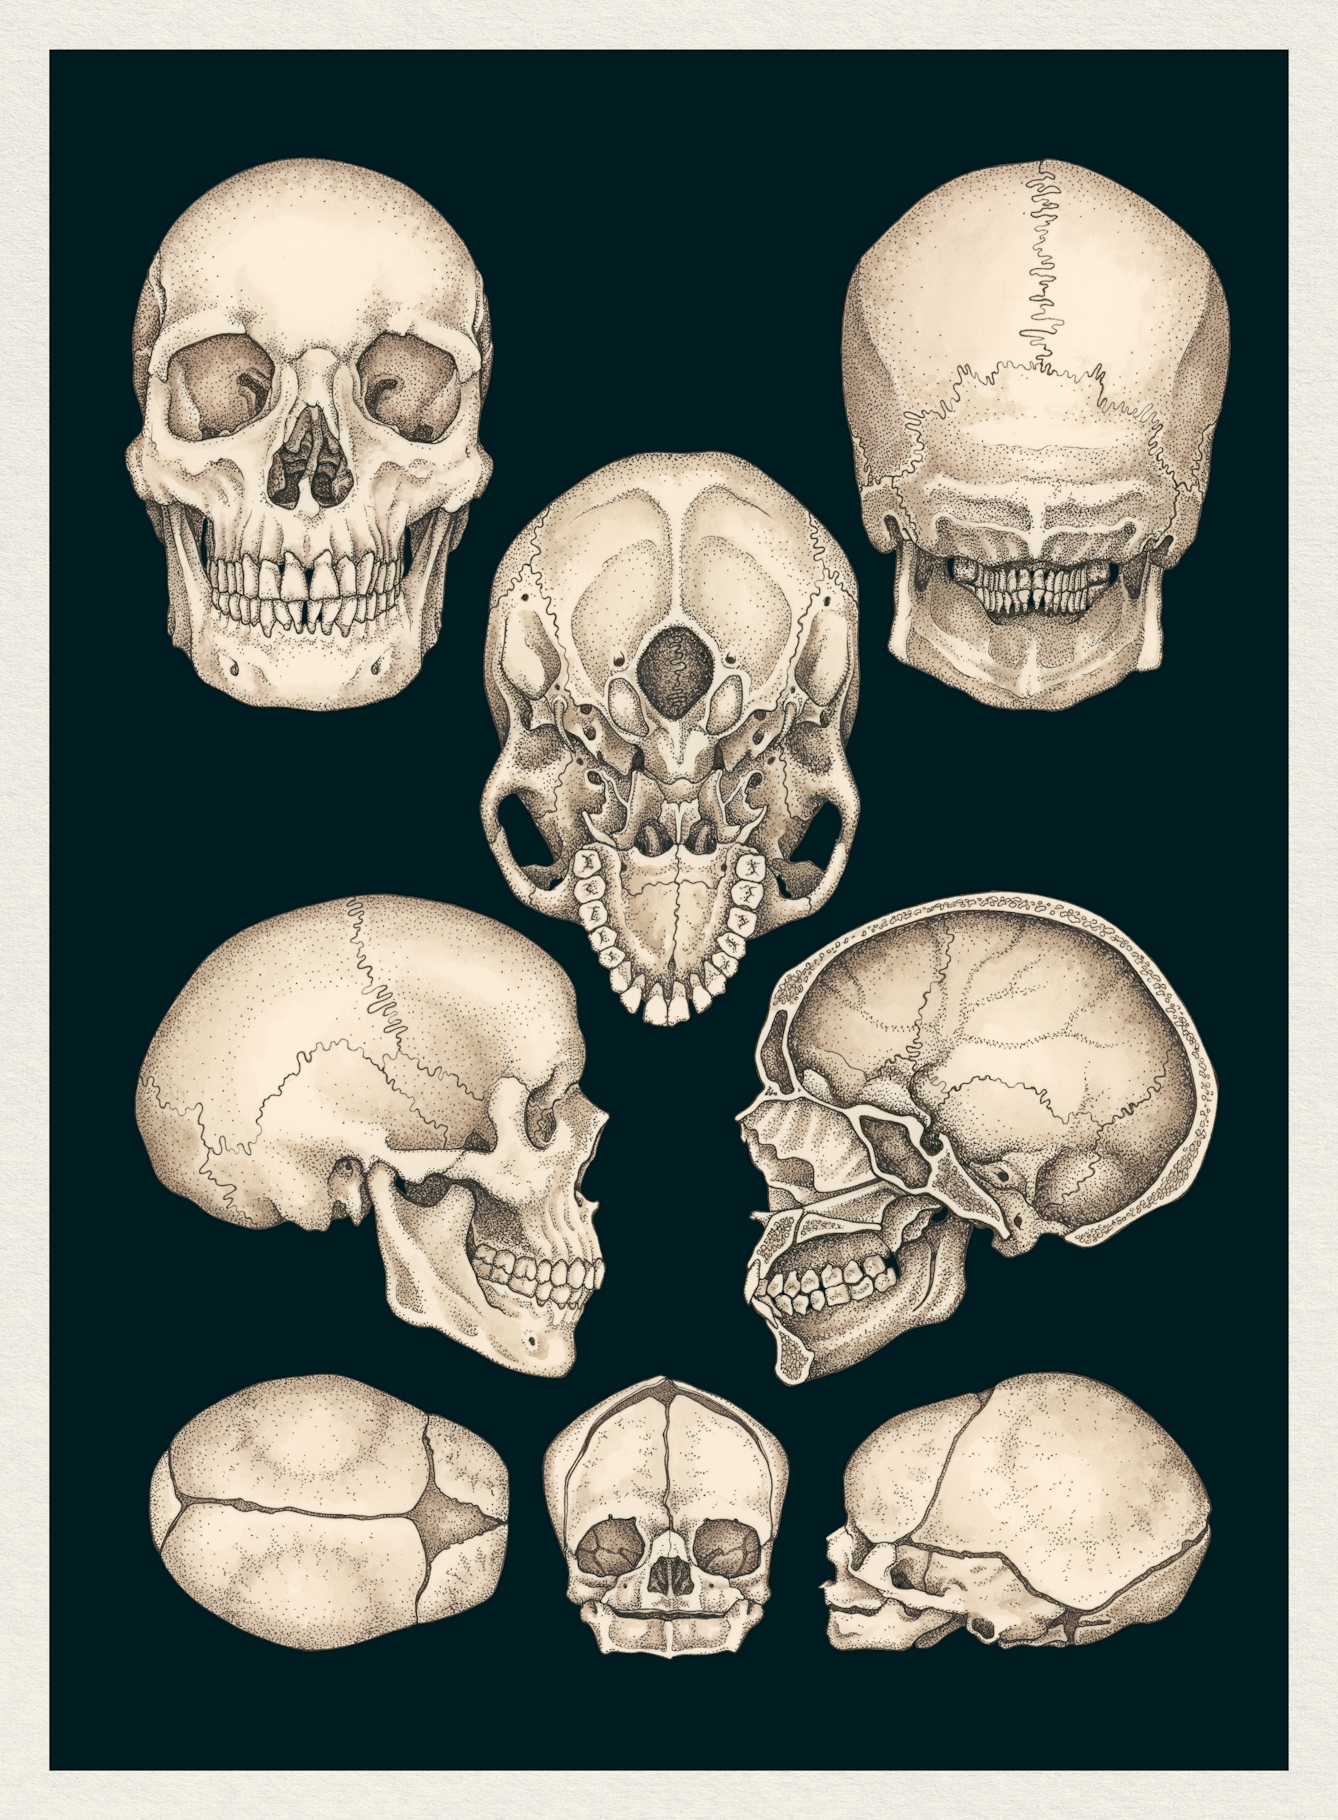 Illustration of the human skull